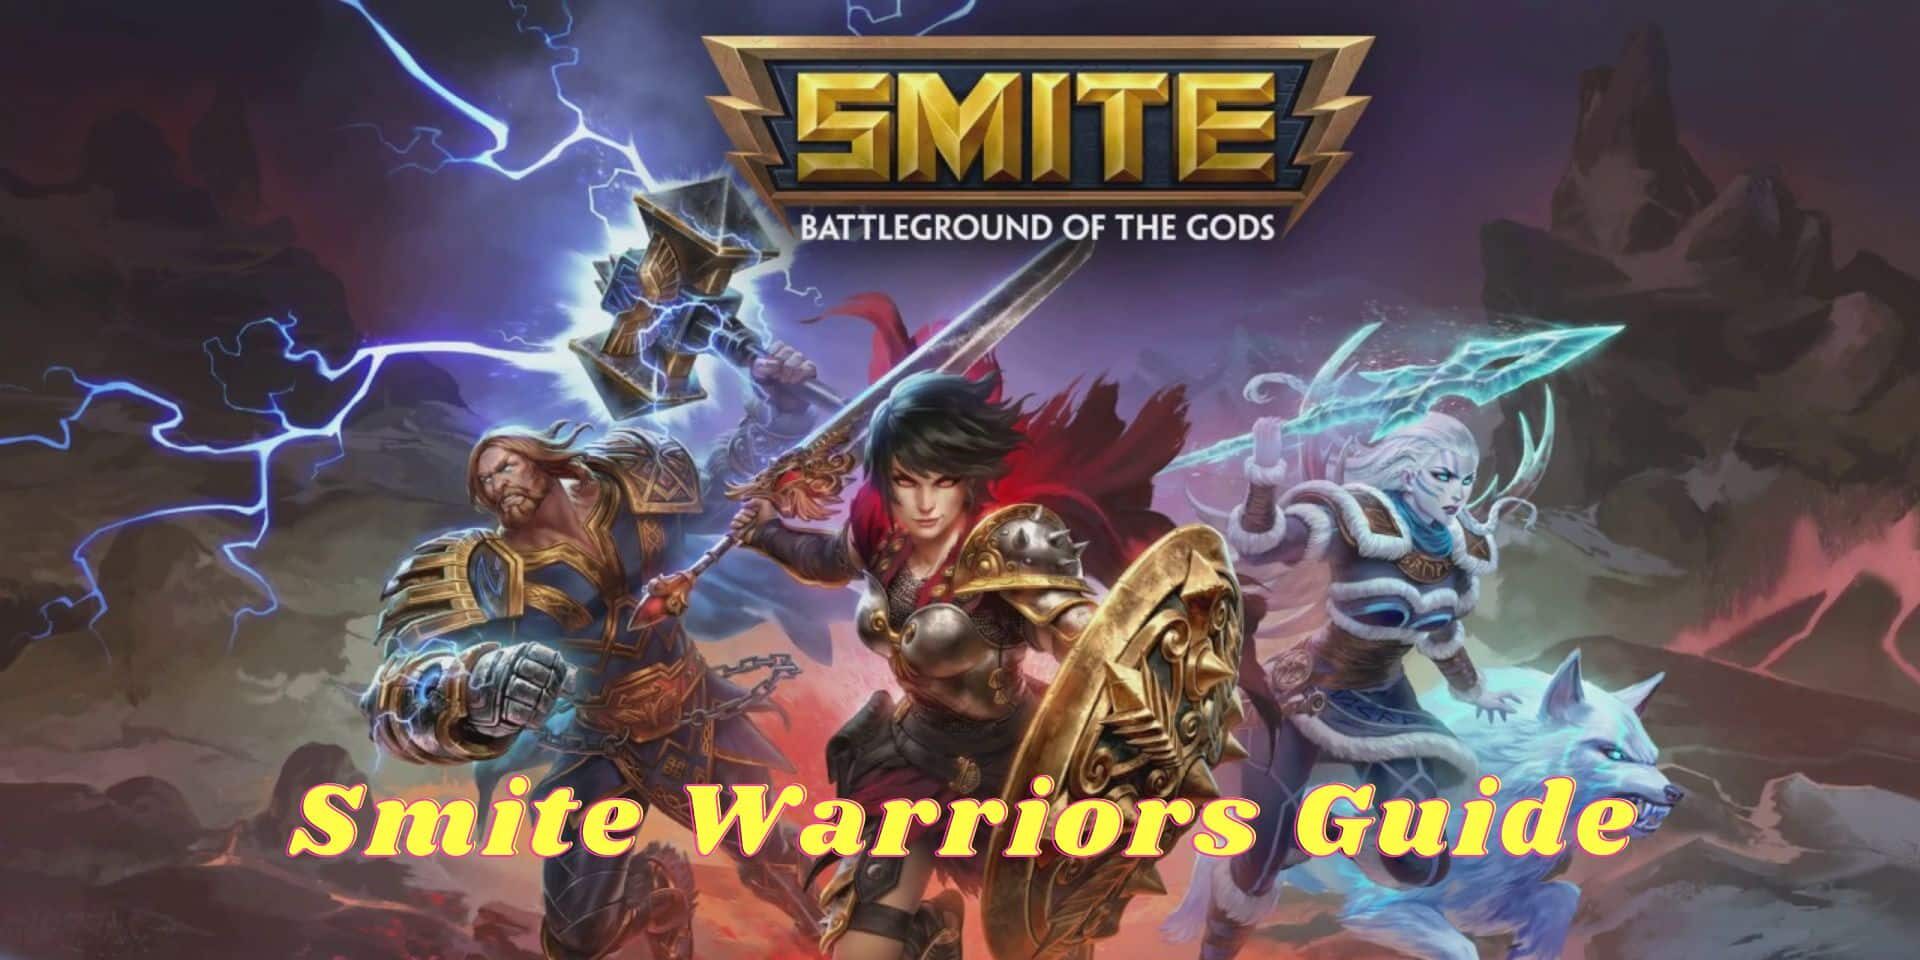 Smite Warriors Guide aspect ratio 2 1